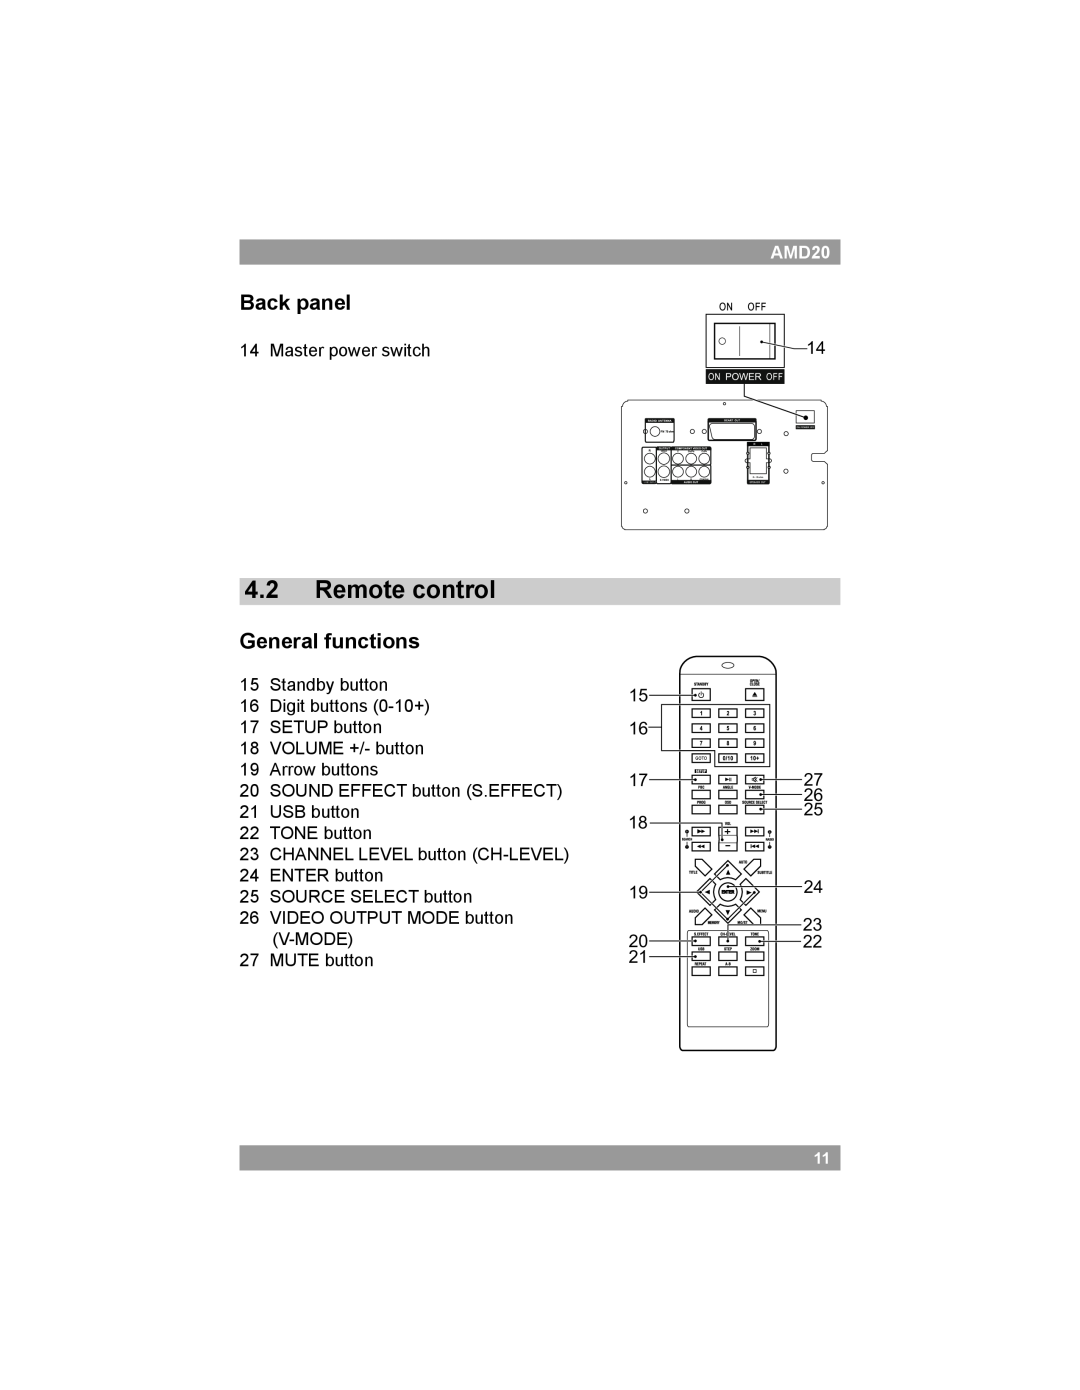 Akai AMD20 manual 4.2Remote control, Back panel, General functions 